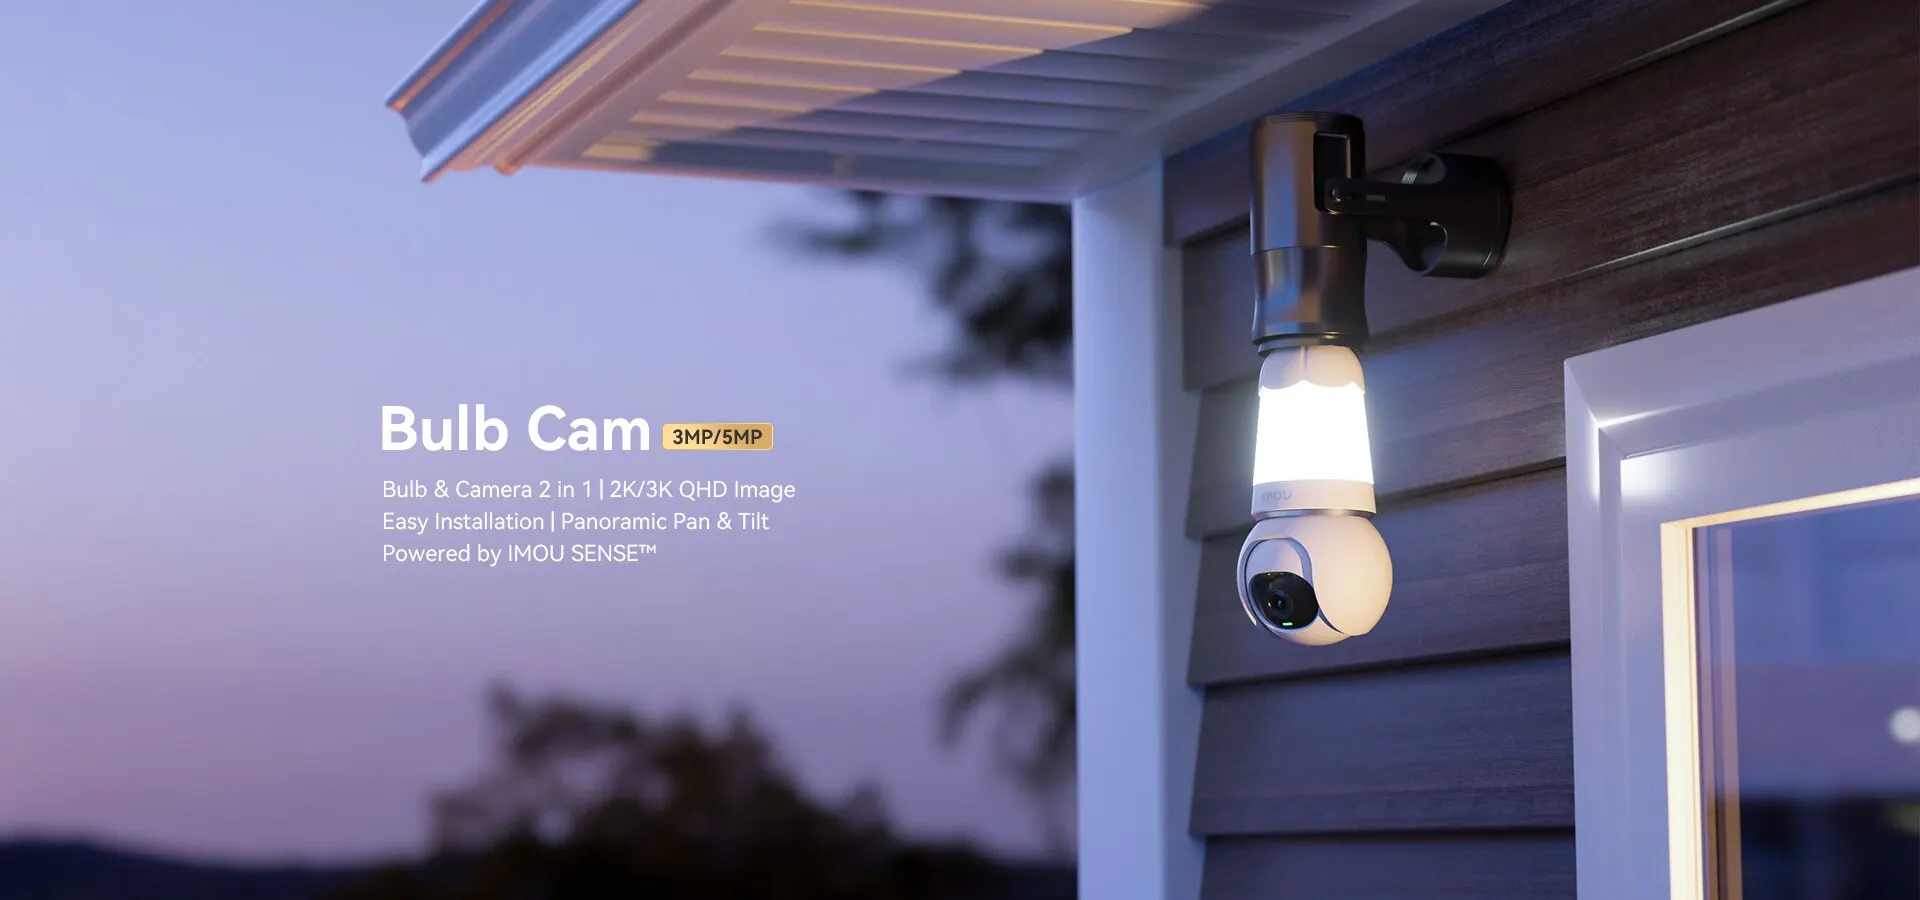 IMOU Bulb Camera 3MP/5MP 3K QHD Bulb&Camera 2 in 1 Wi-fi Two-way Talk Security Surveillance CCTV Camera